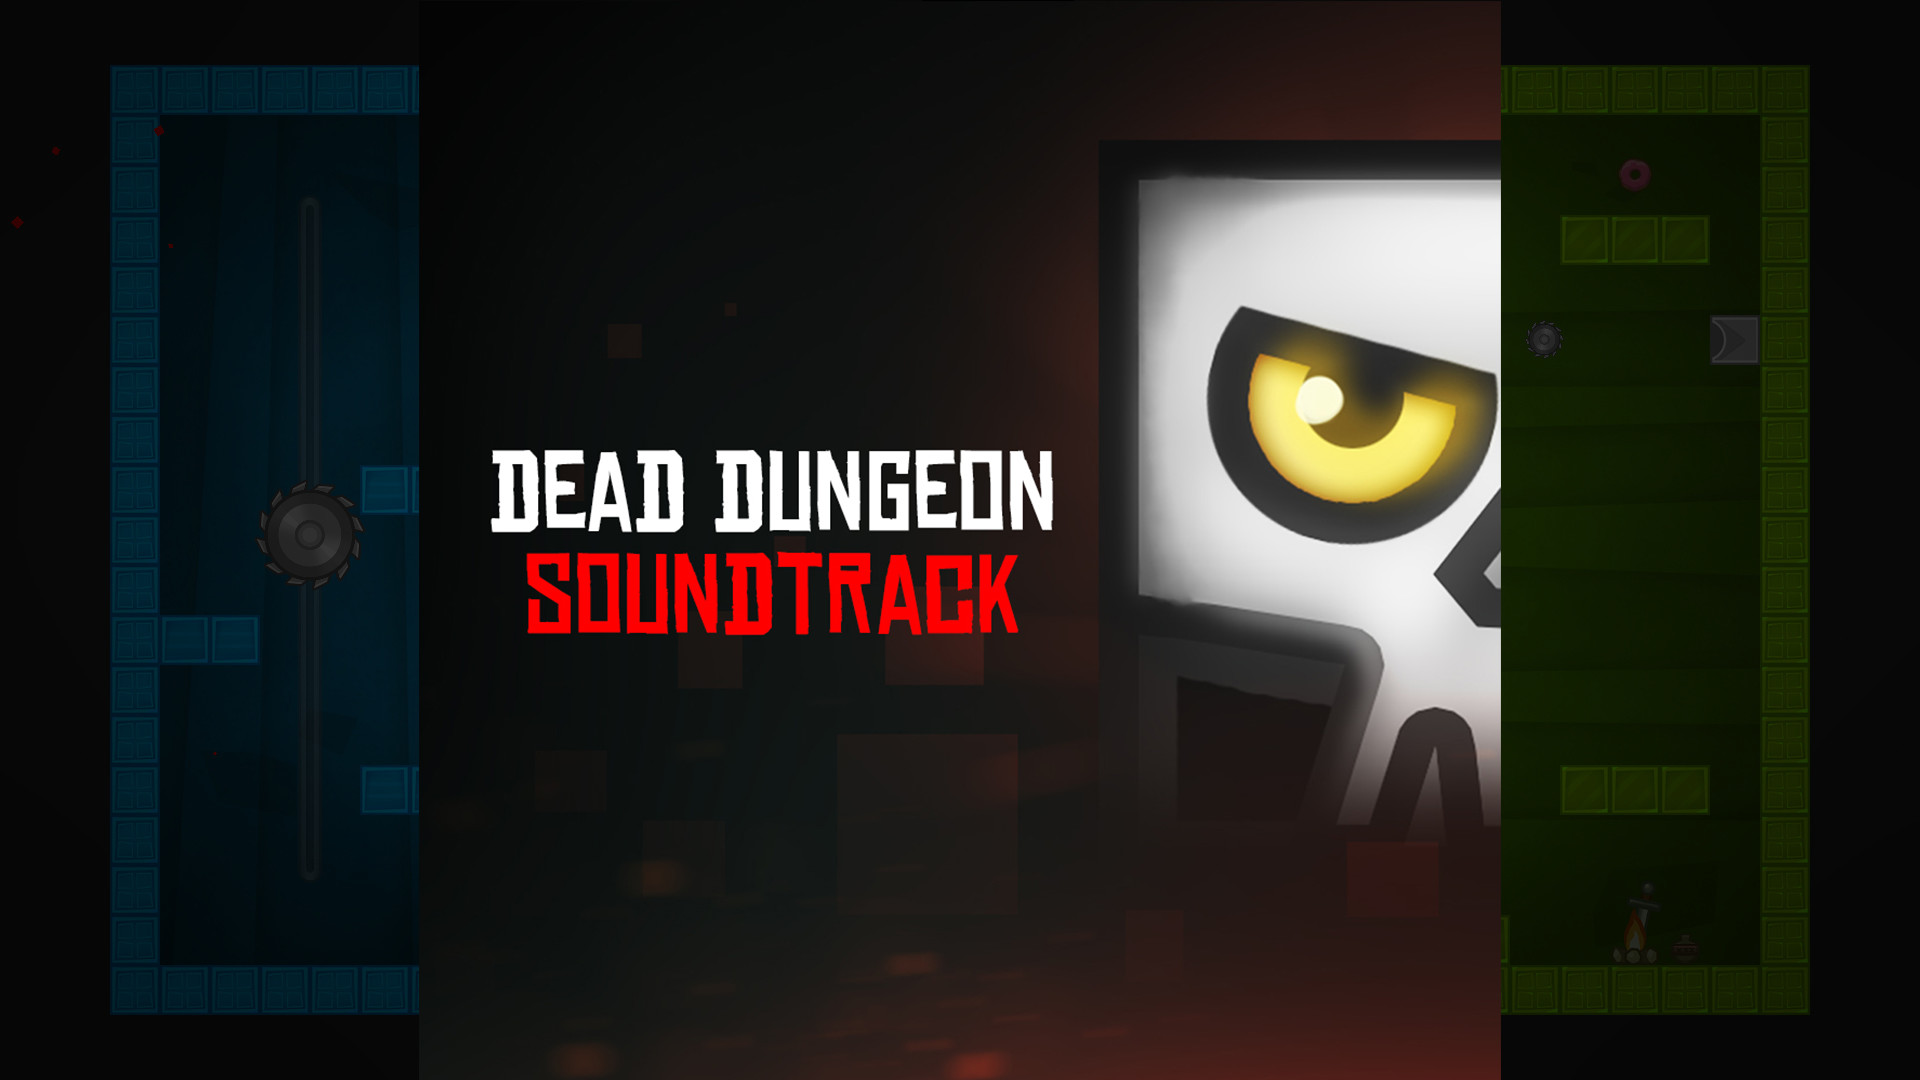 Dead Dungeon - Soundtrack + Art Featured Screenshot #1